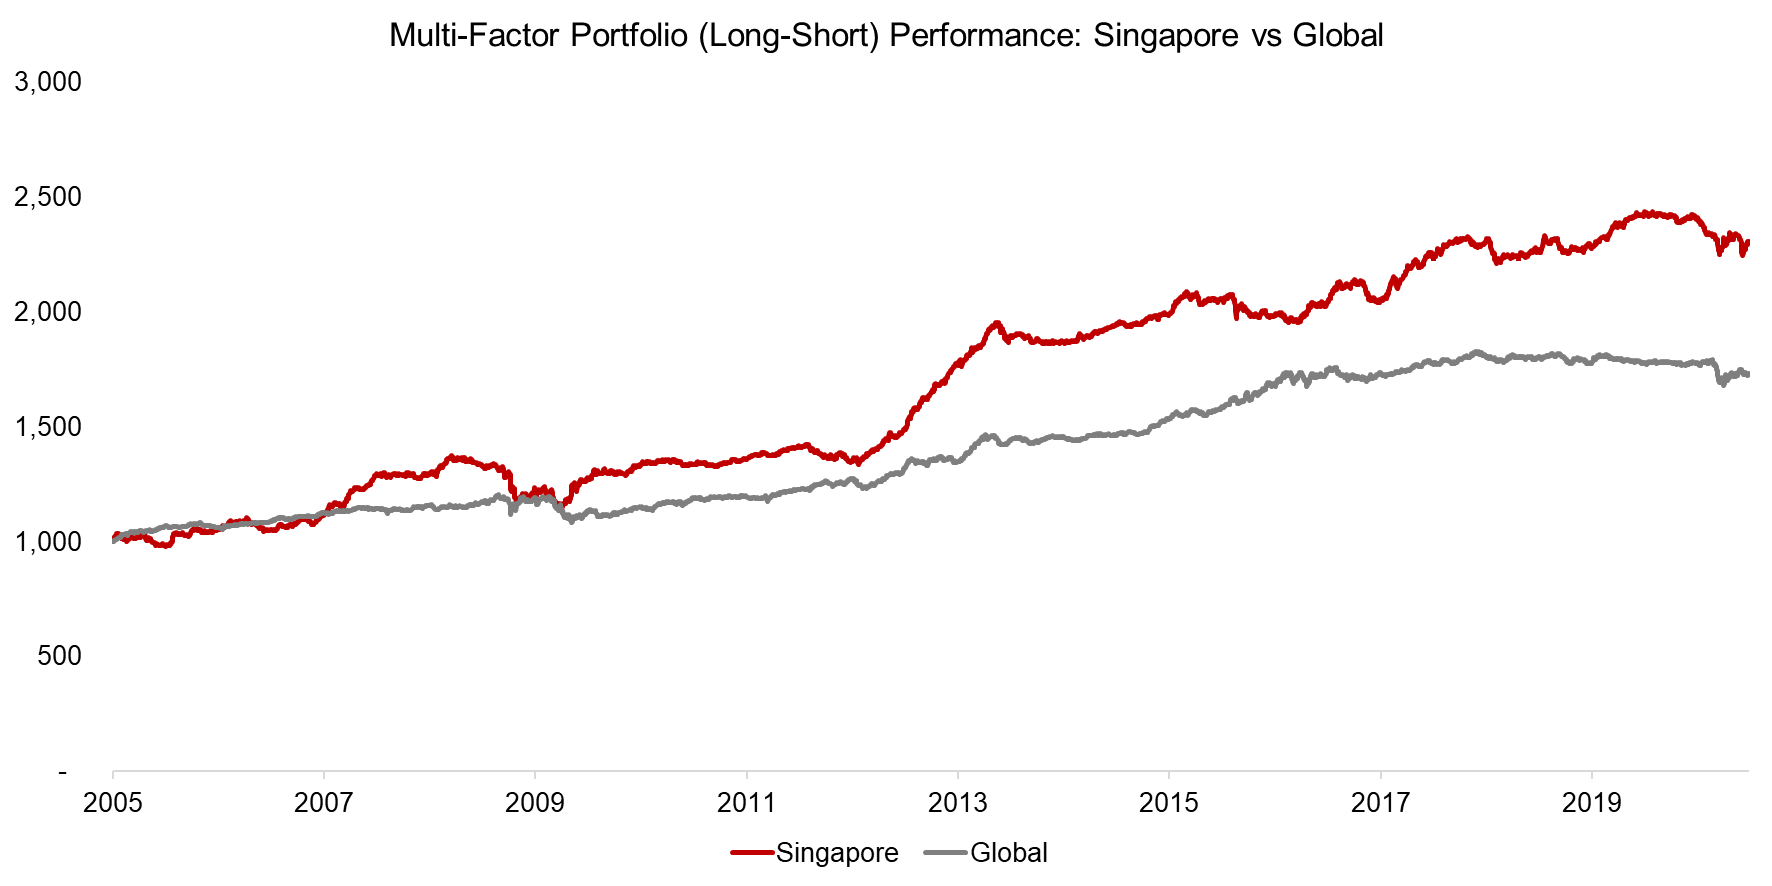 Multi-Factor Portfolio (Long-Short) Performance Singapore vs Global